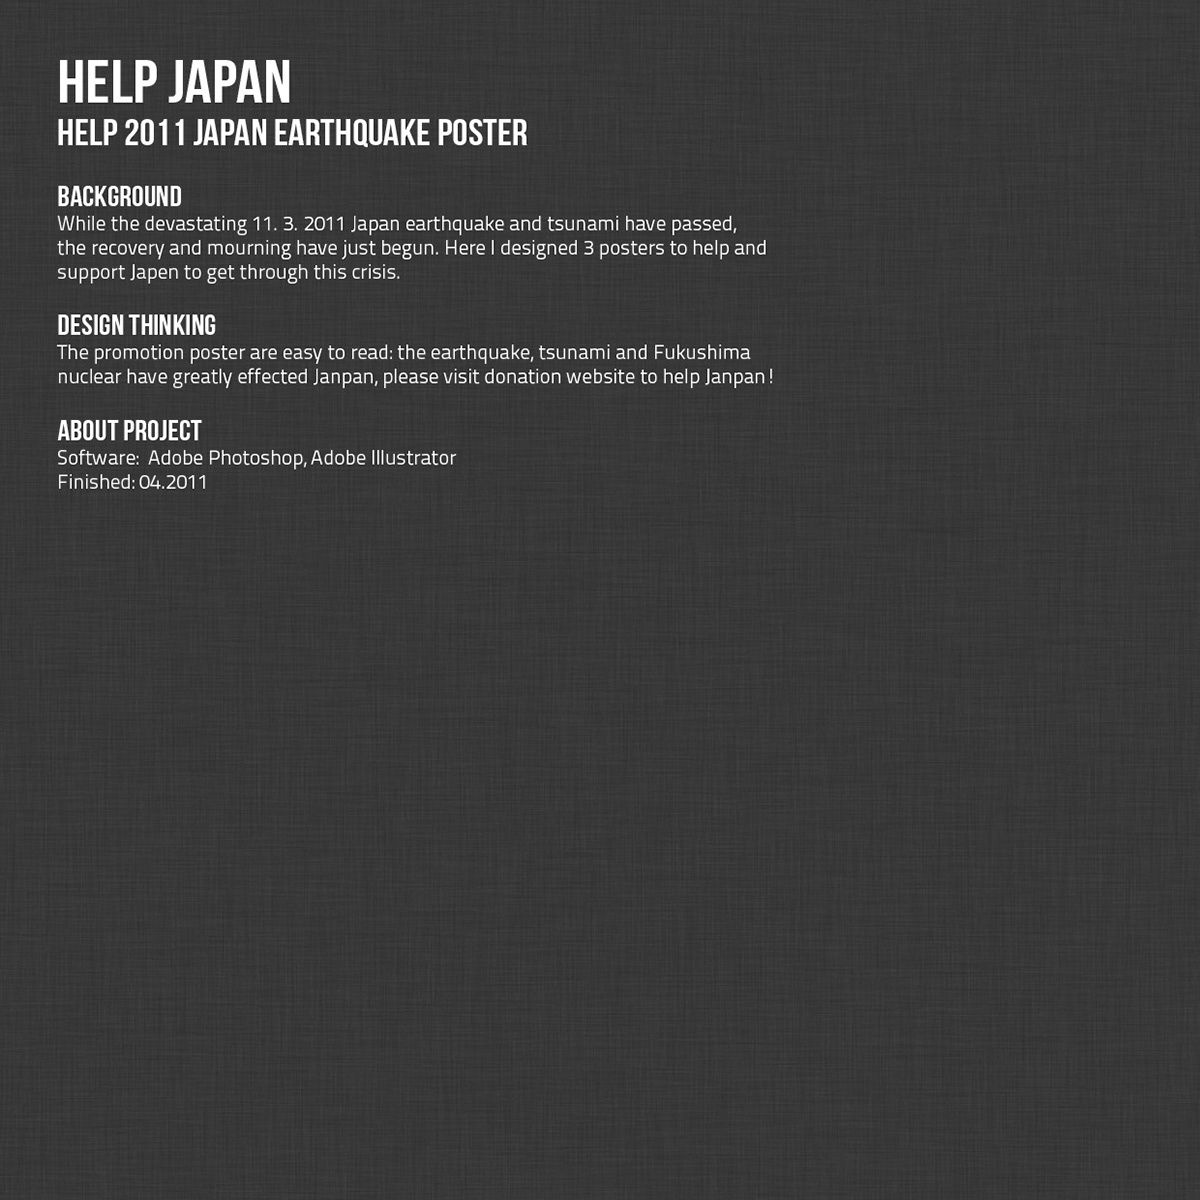 11.03.11 2011 Japan earthquake Donation poster